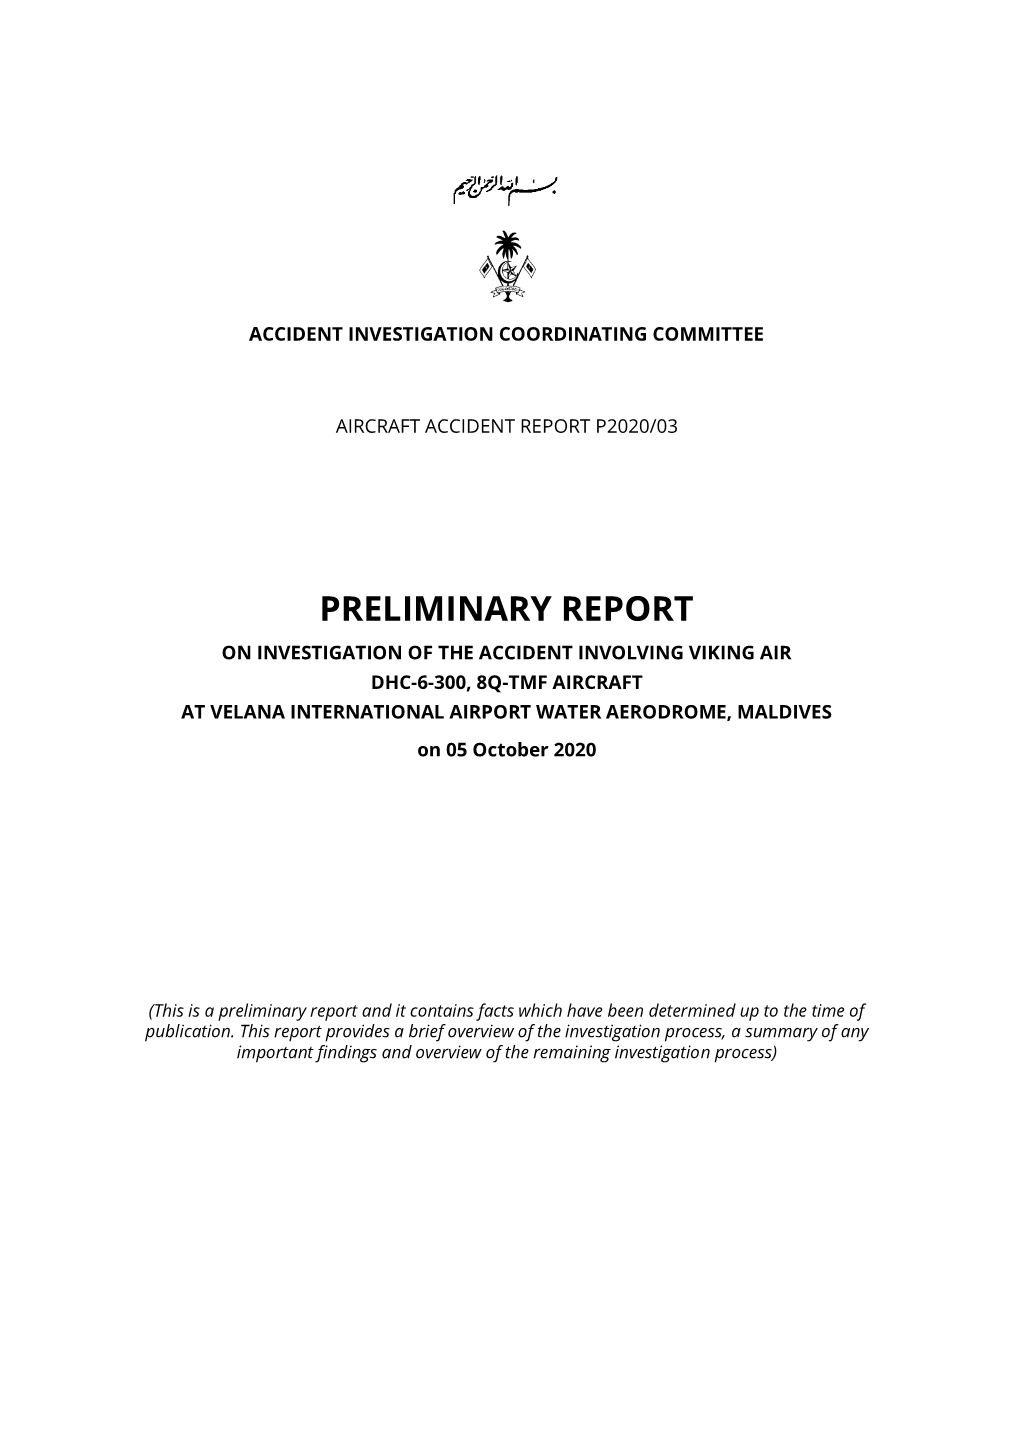 Preliminary Report on Investigation of the Accident Involving Viking Air Dhc-6-300, 8Q-Tmf Aircraft at Velana International Airport Water Aerodrome, Maldives